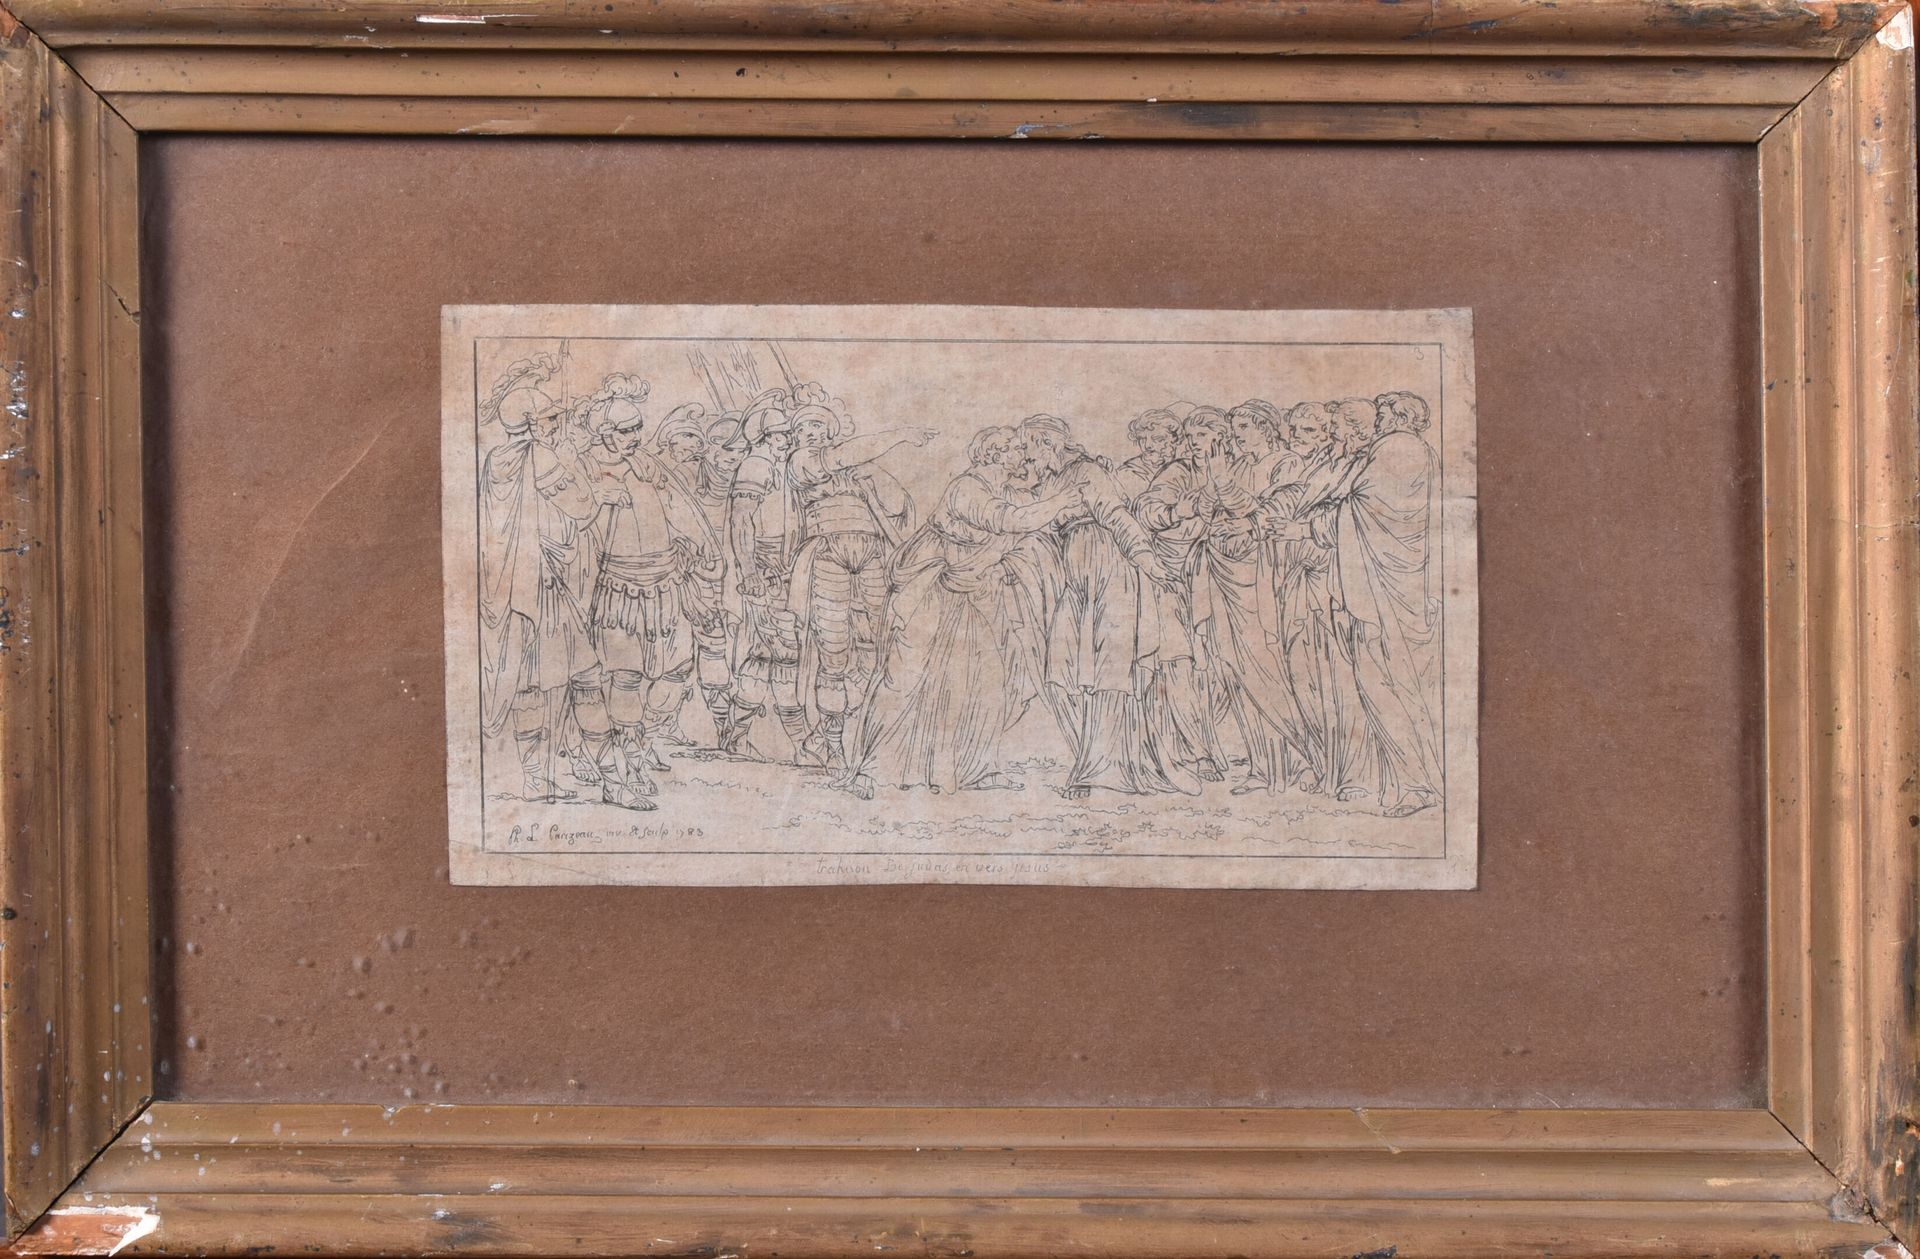 Null 菲利普-路易-帕里索(Philippe Louis PARIZEAU) (1740-1801)

对犹大的背叛

蚀刻版画，版上有标题、签名和日期

&hellip;